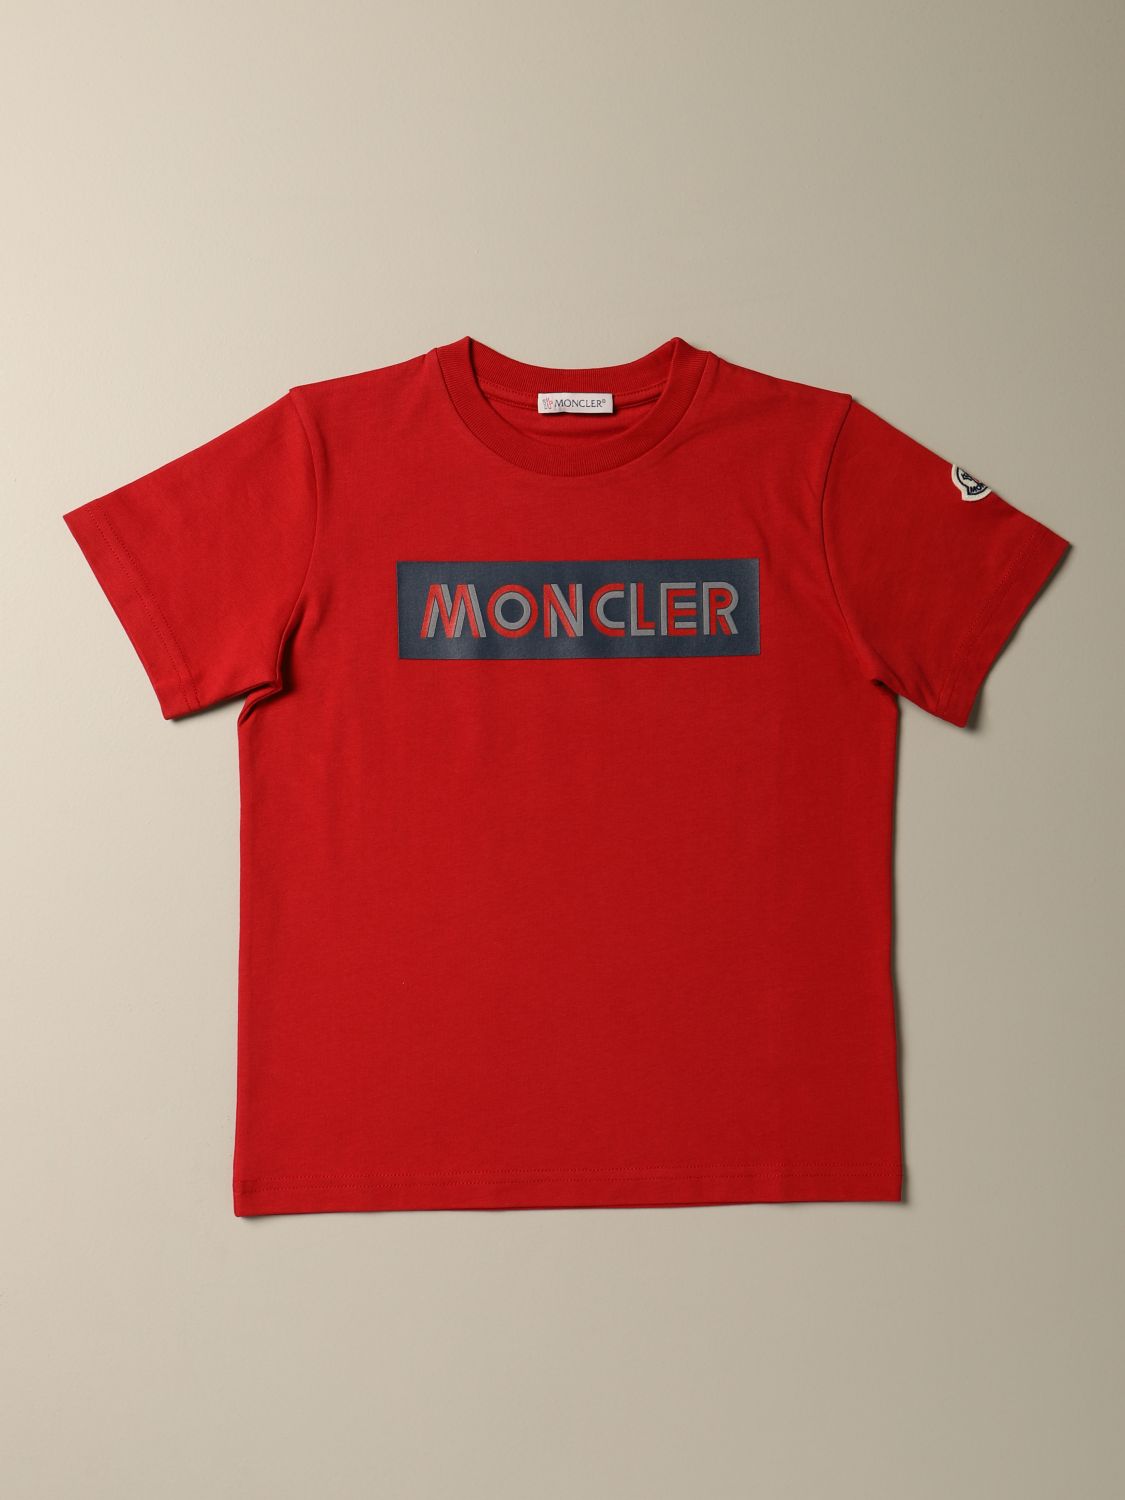 moncler red shirt